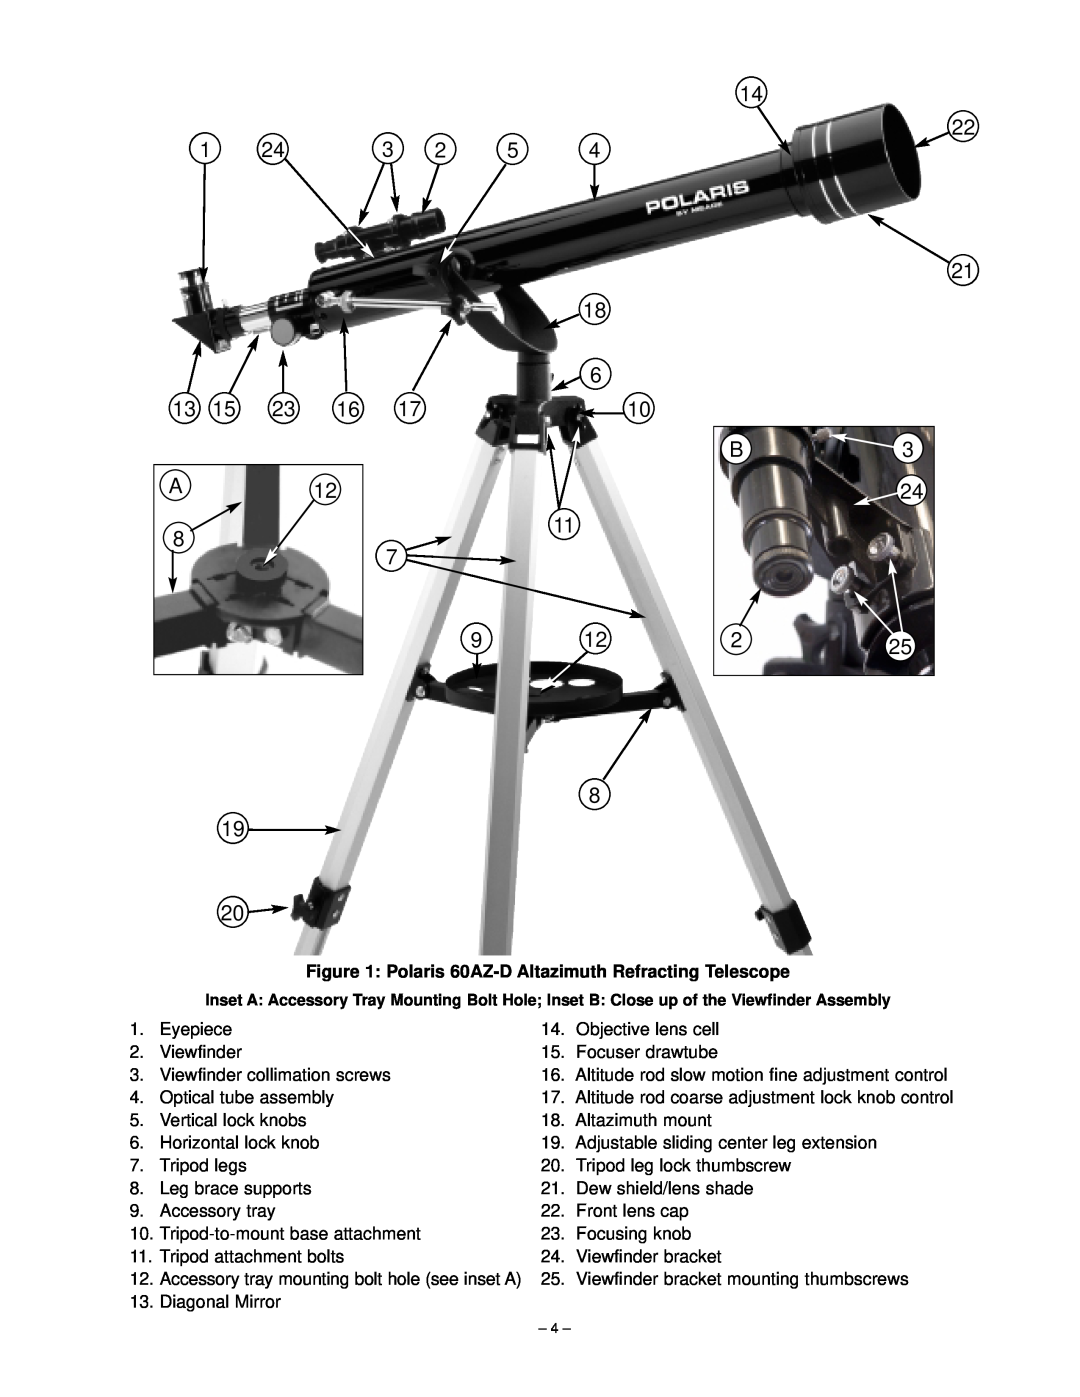 Meade instruction manual 1710, Polaris 60AZ-D Altazimuth Refracting Telescope 